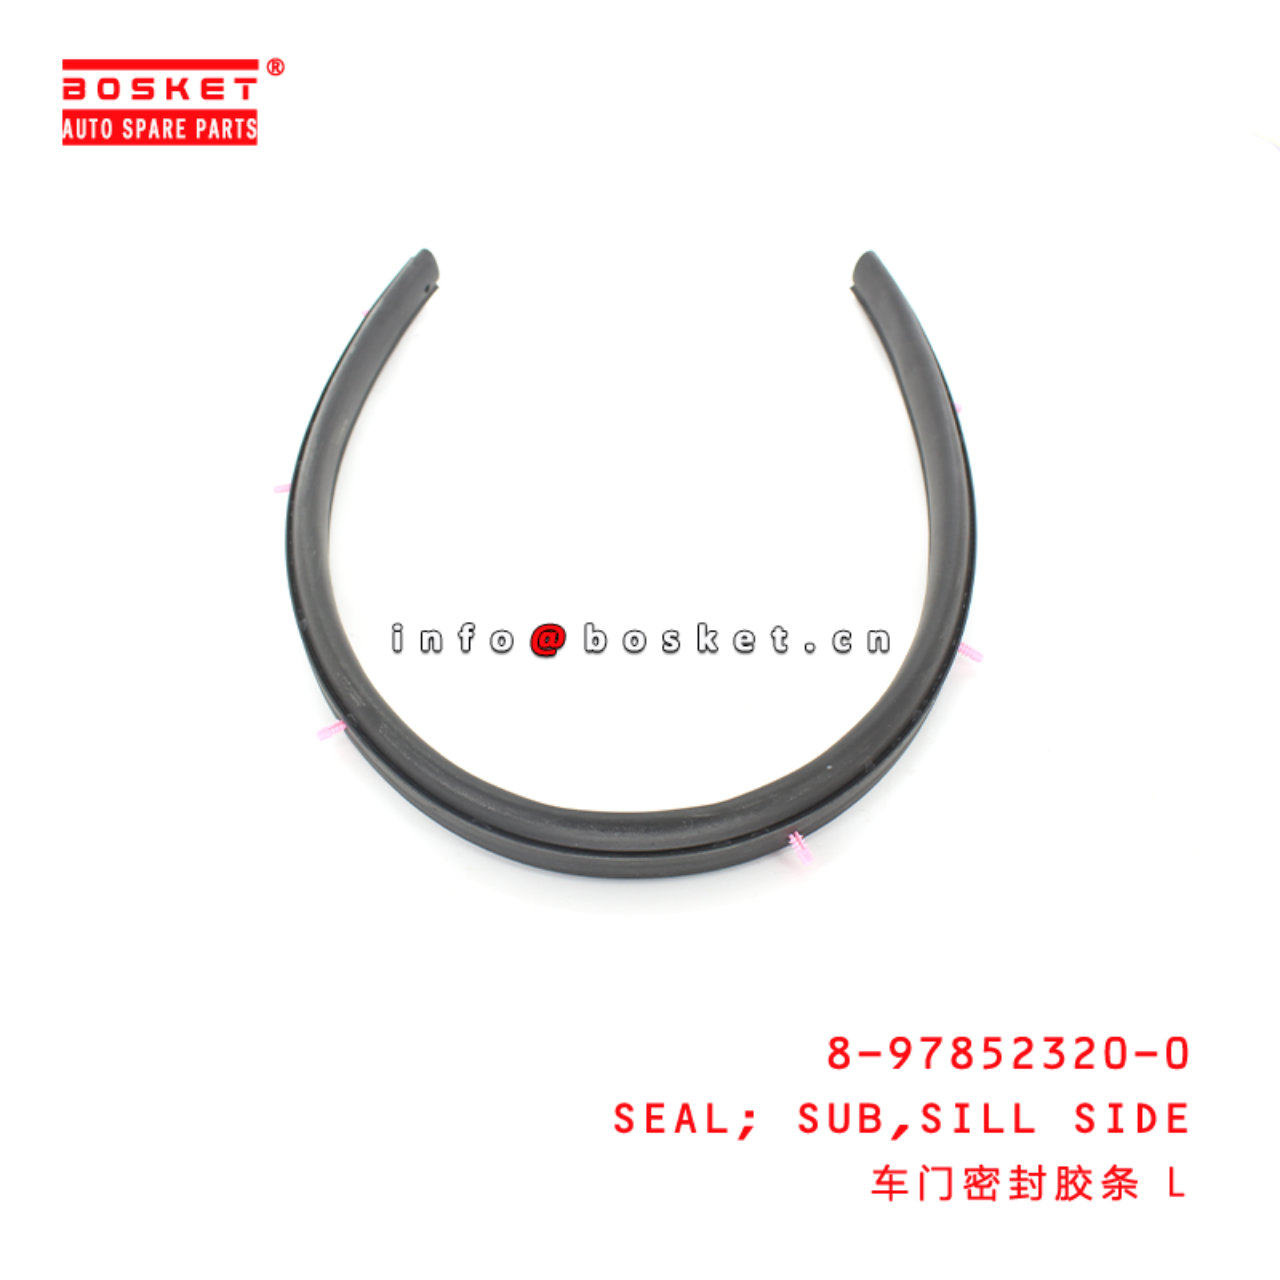 8-97852320-0 Sill Side Subsidiary Seal Suitable for ISUZU NKR94 8978523200